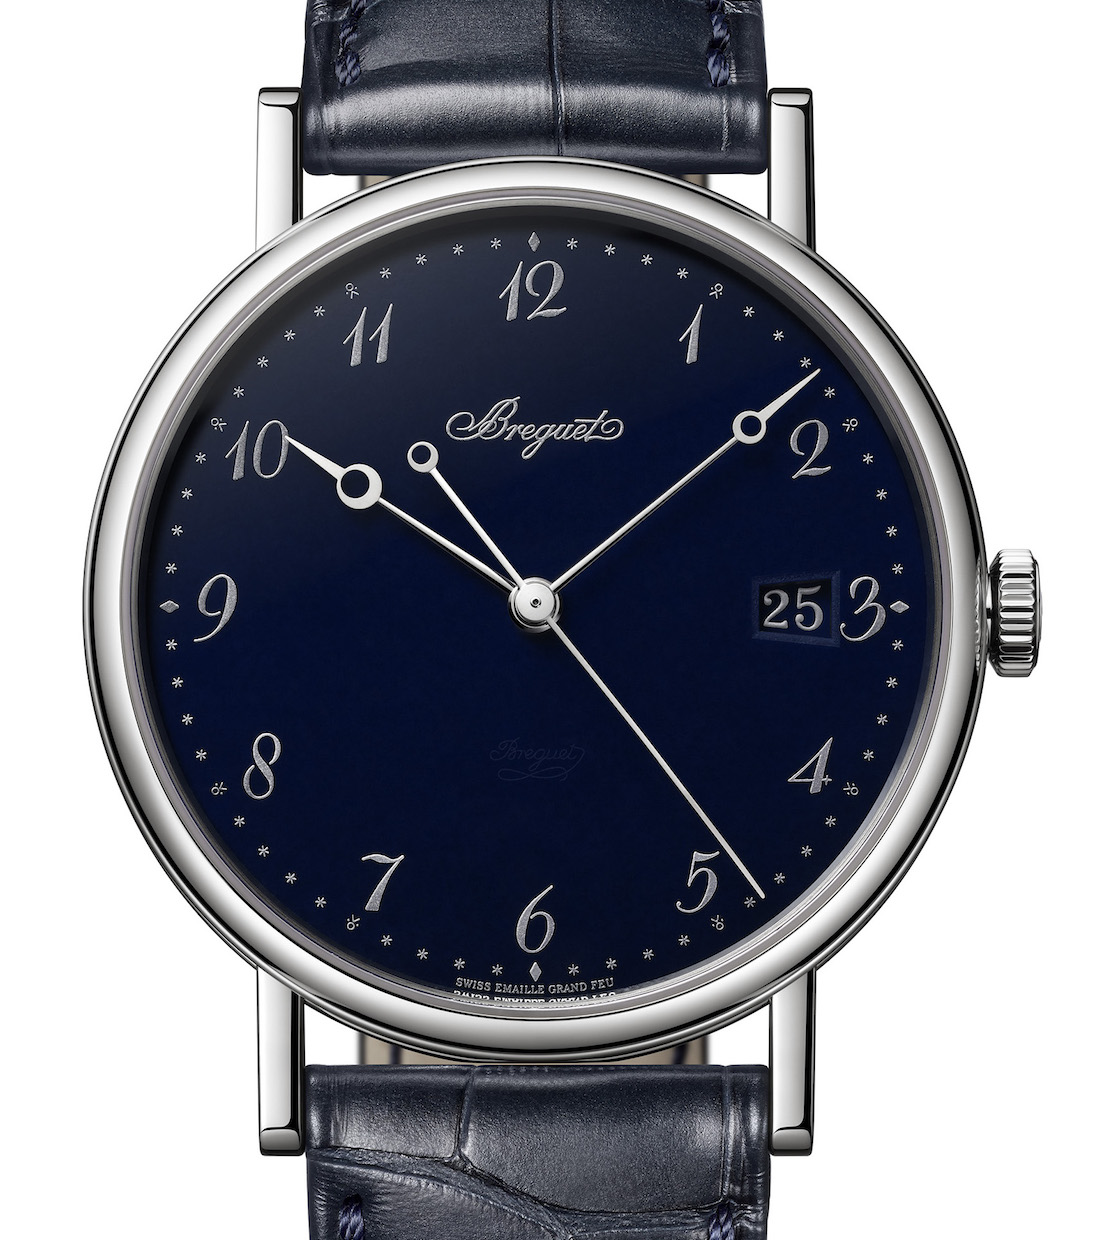 Breguet Classique 5177 Grand Feu Blue Enamel Dial Watch Watch Releases 